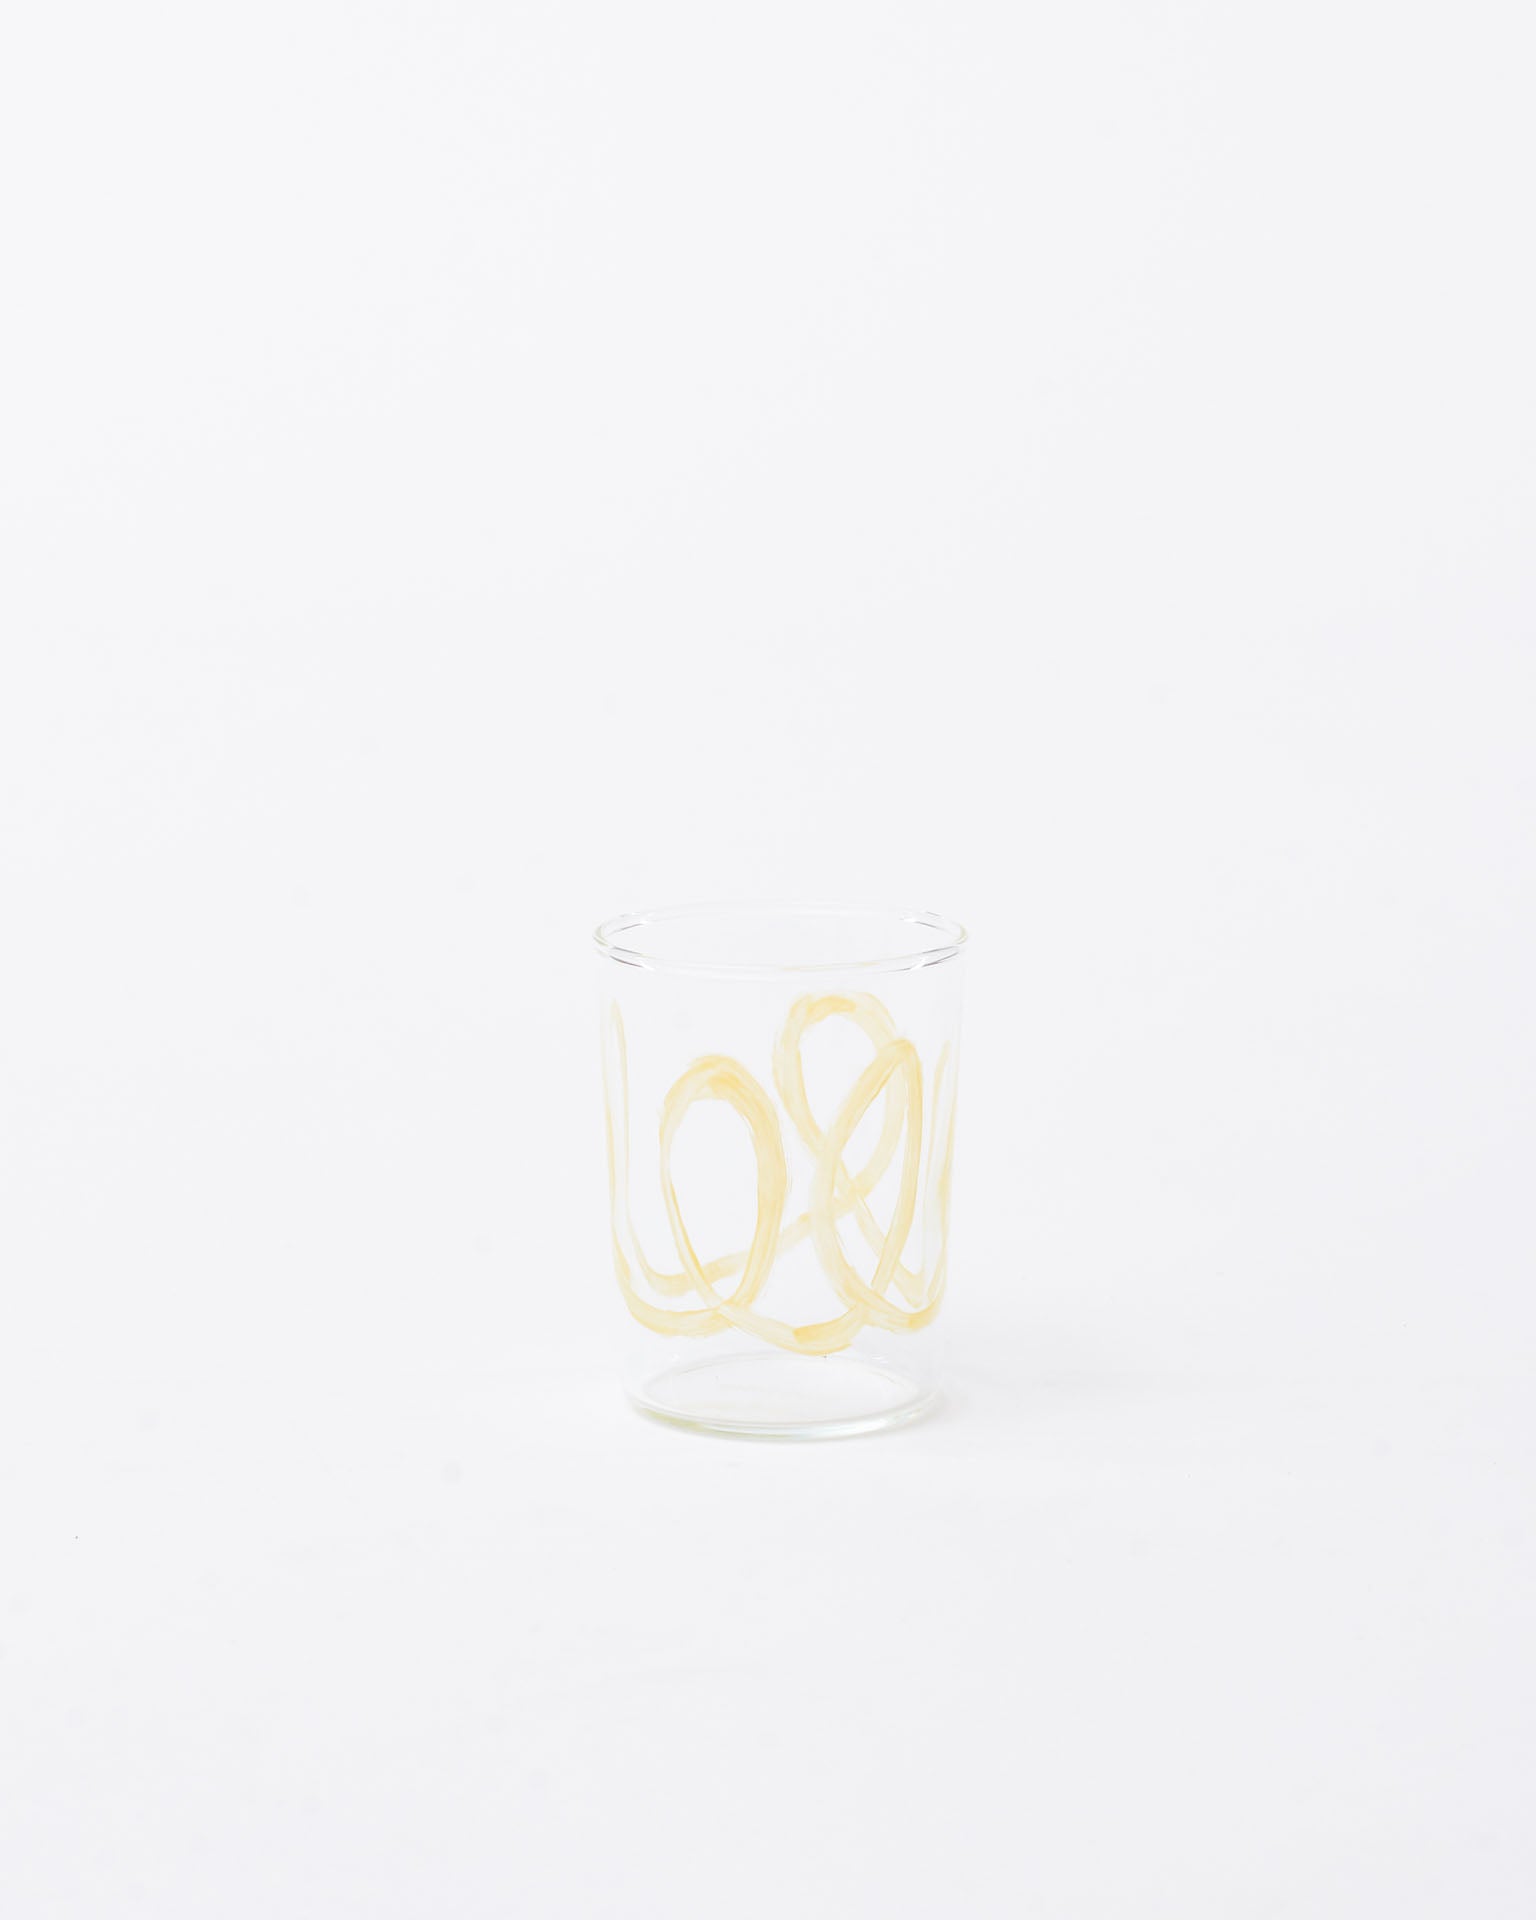 Glass yellow swirl design in white background 